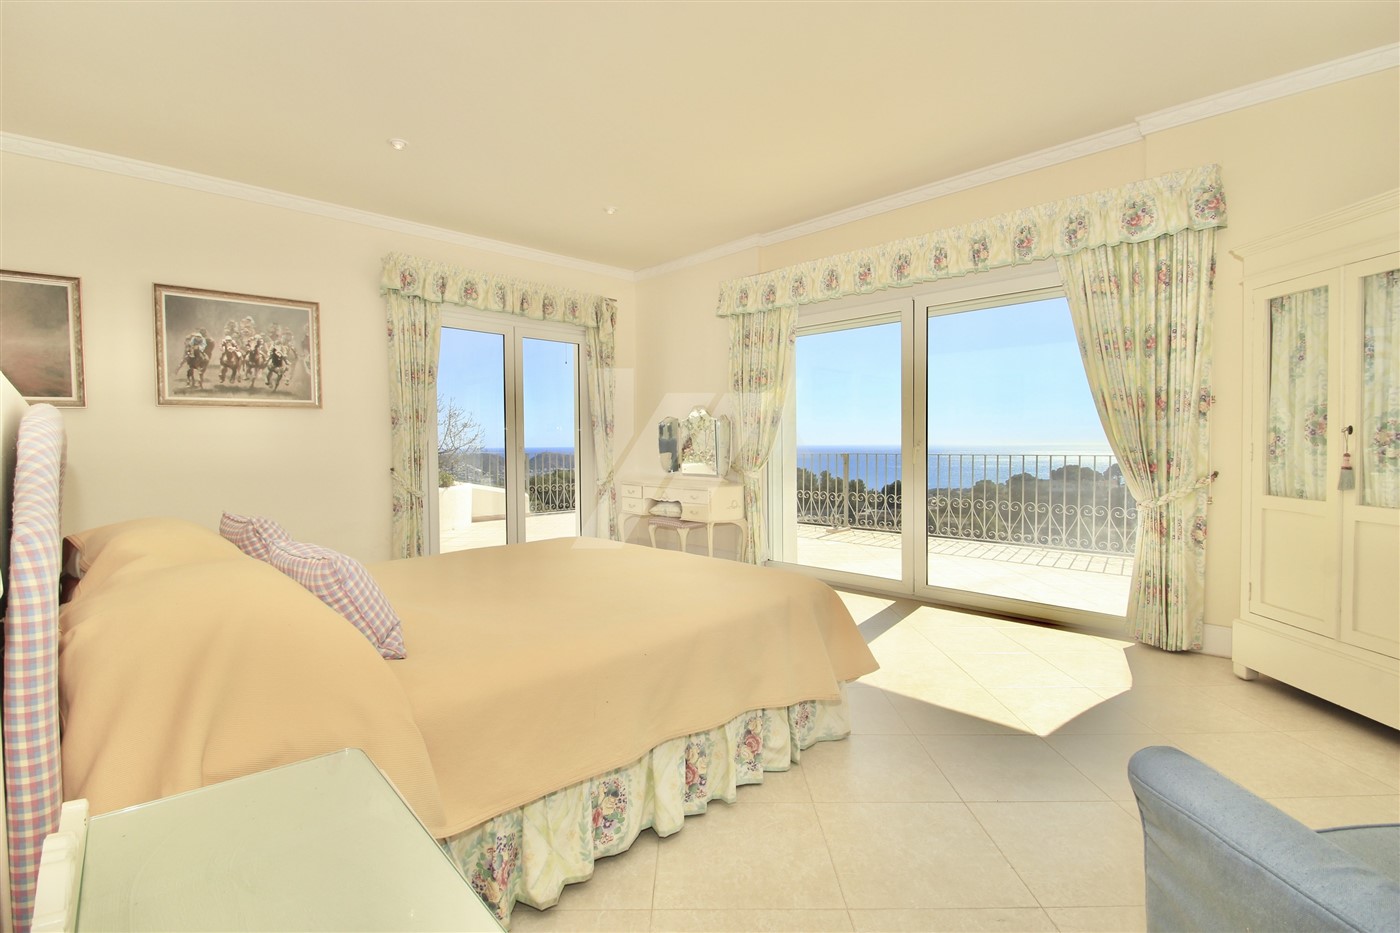 Luxury Villa for sale with panoramic sea views in Moraira, Costa Blanca.